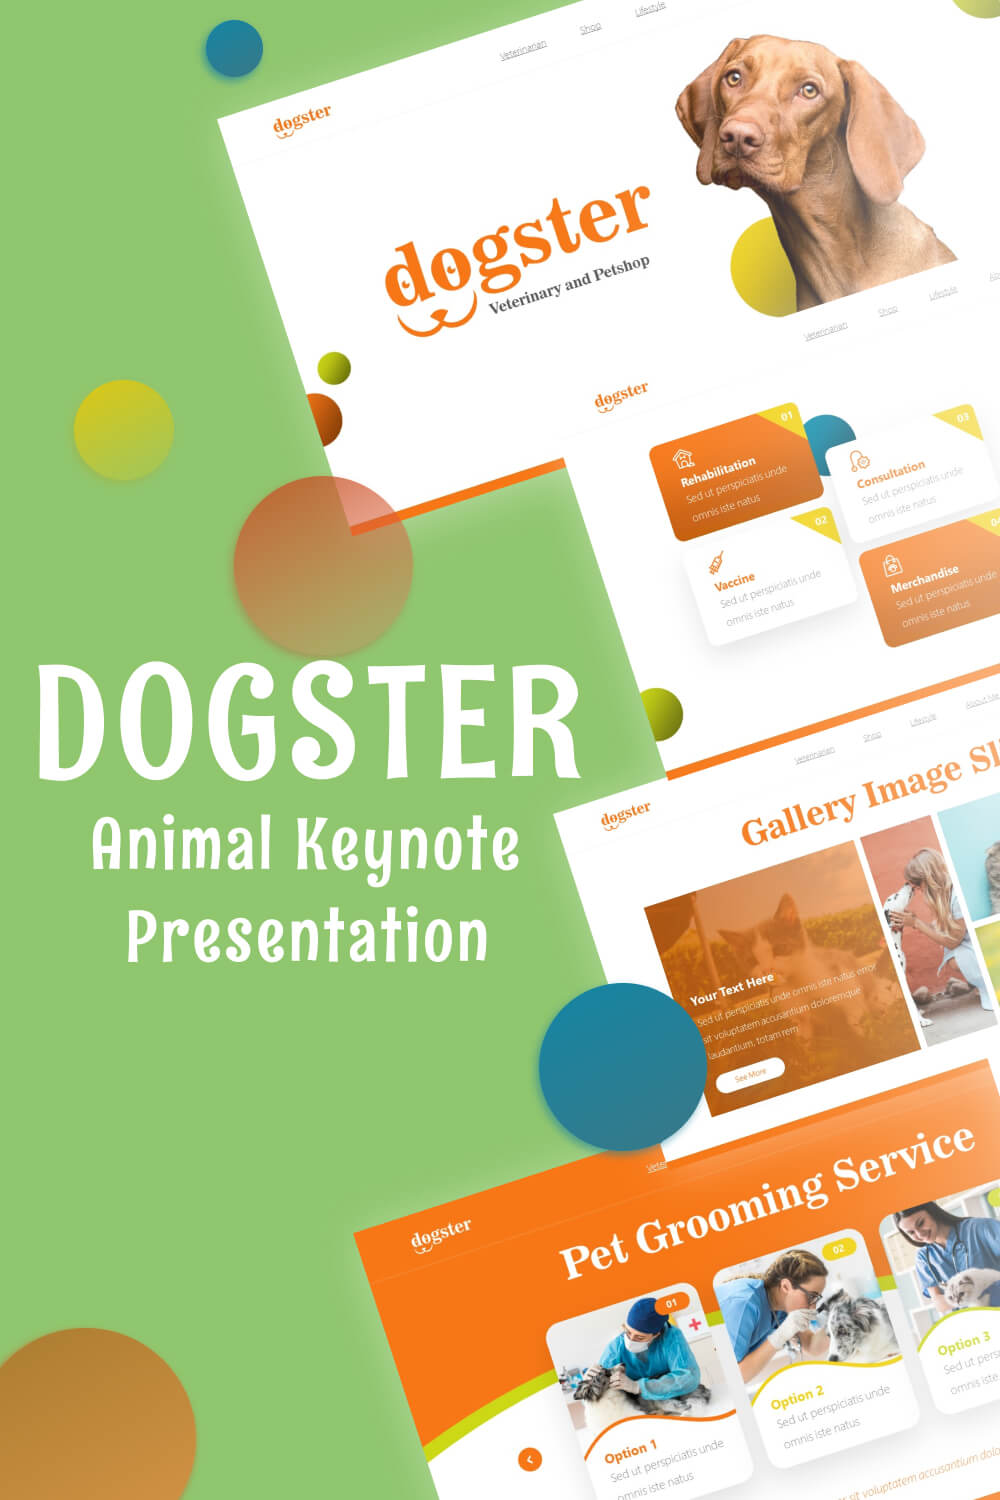 Dogster Animal Keynote Presentation on Green Background.